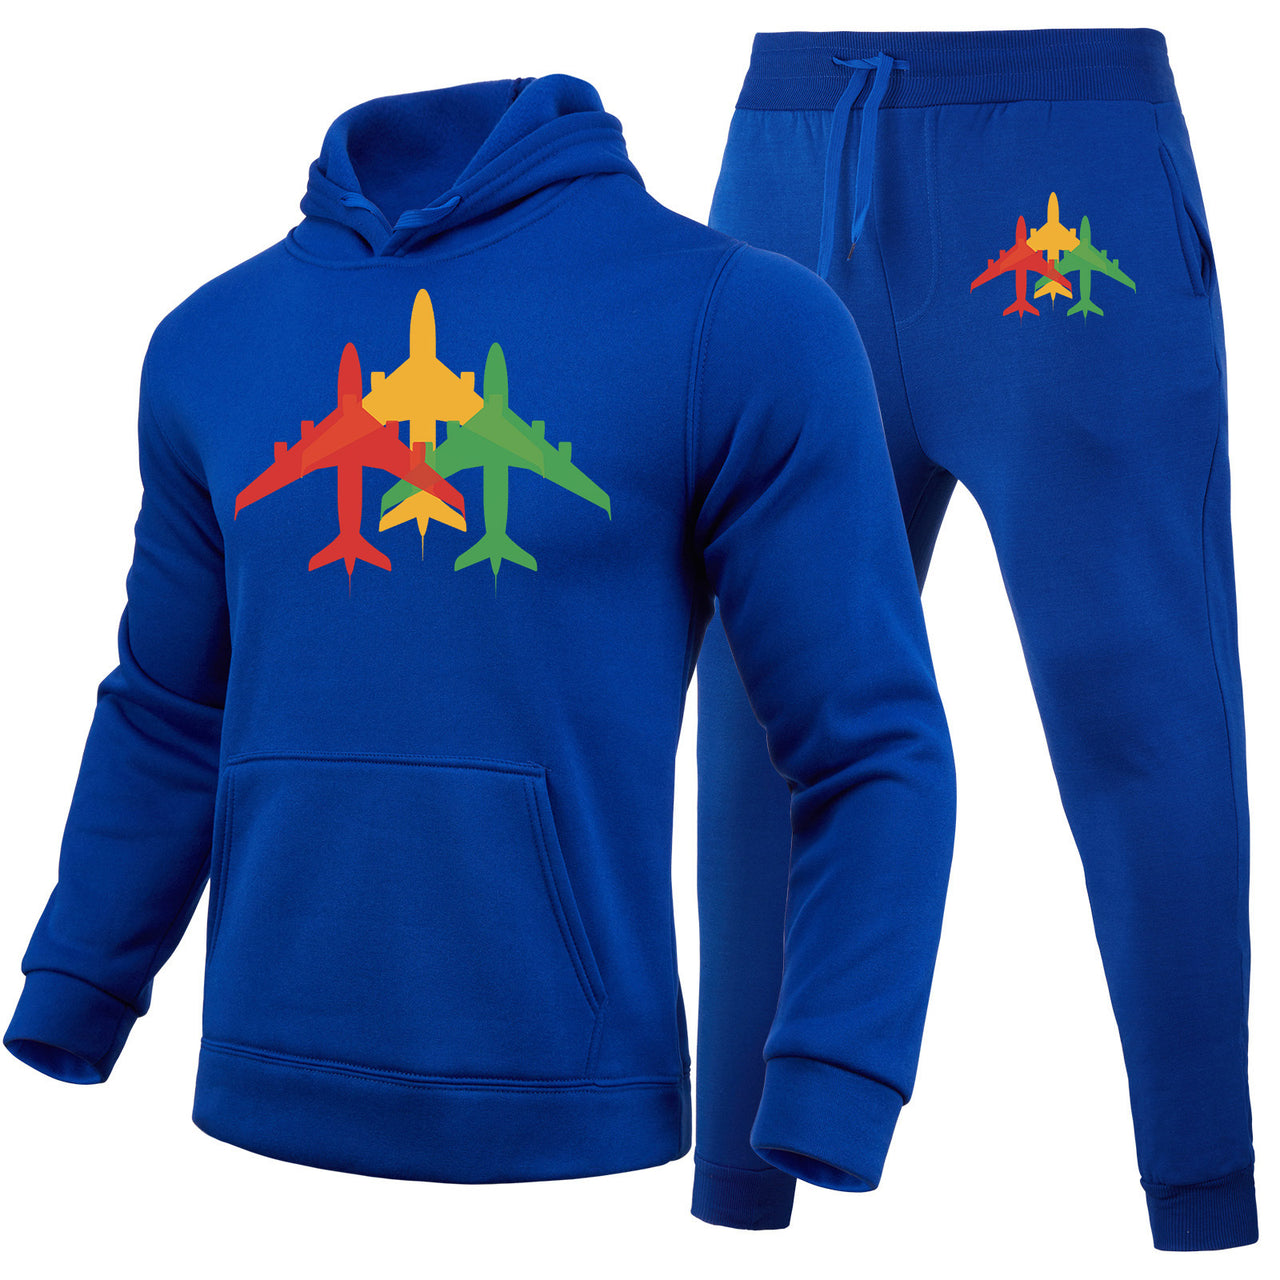 Colourful 3 Airplanes Designed Hoodies & Sweatpants Set